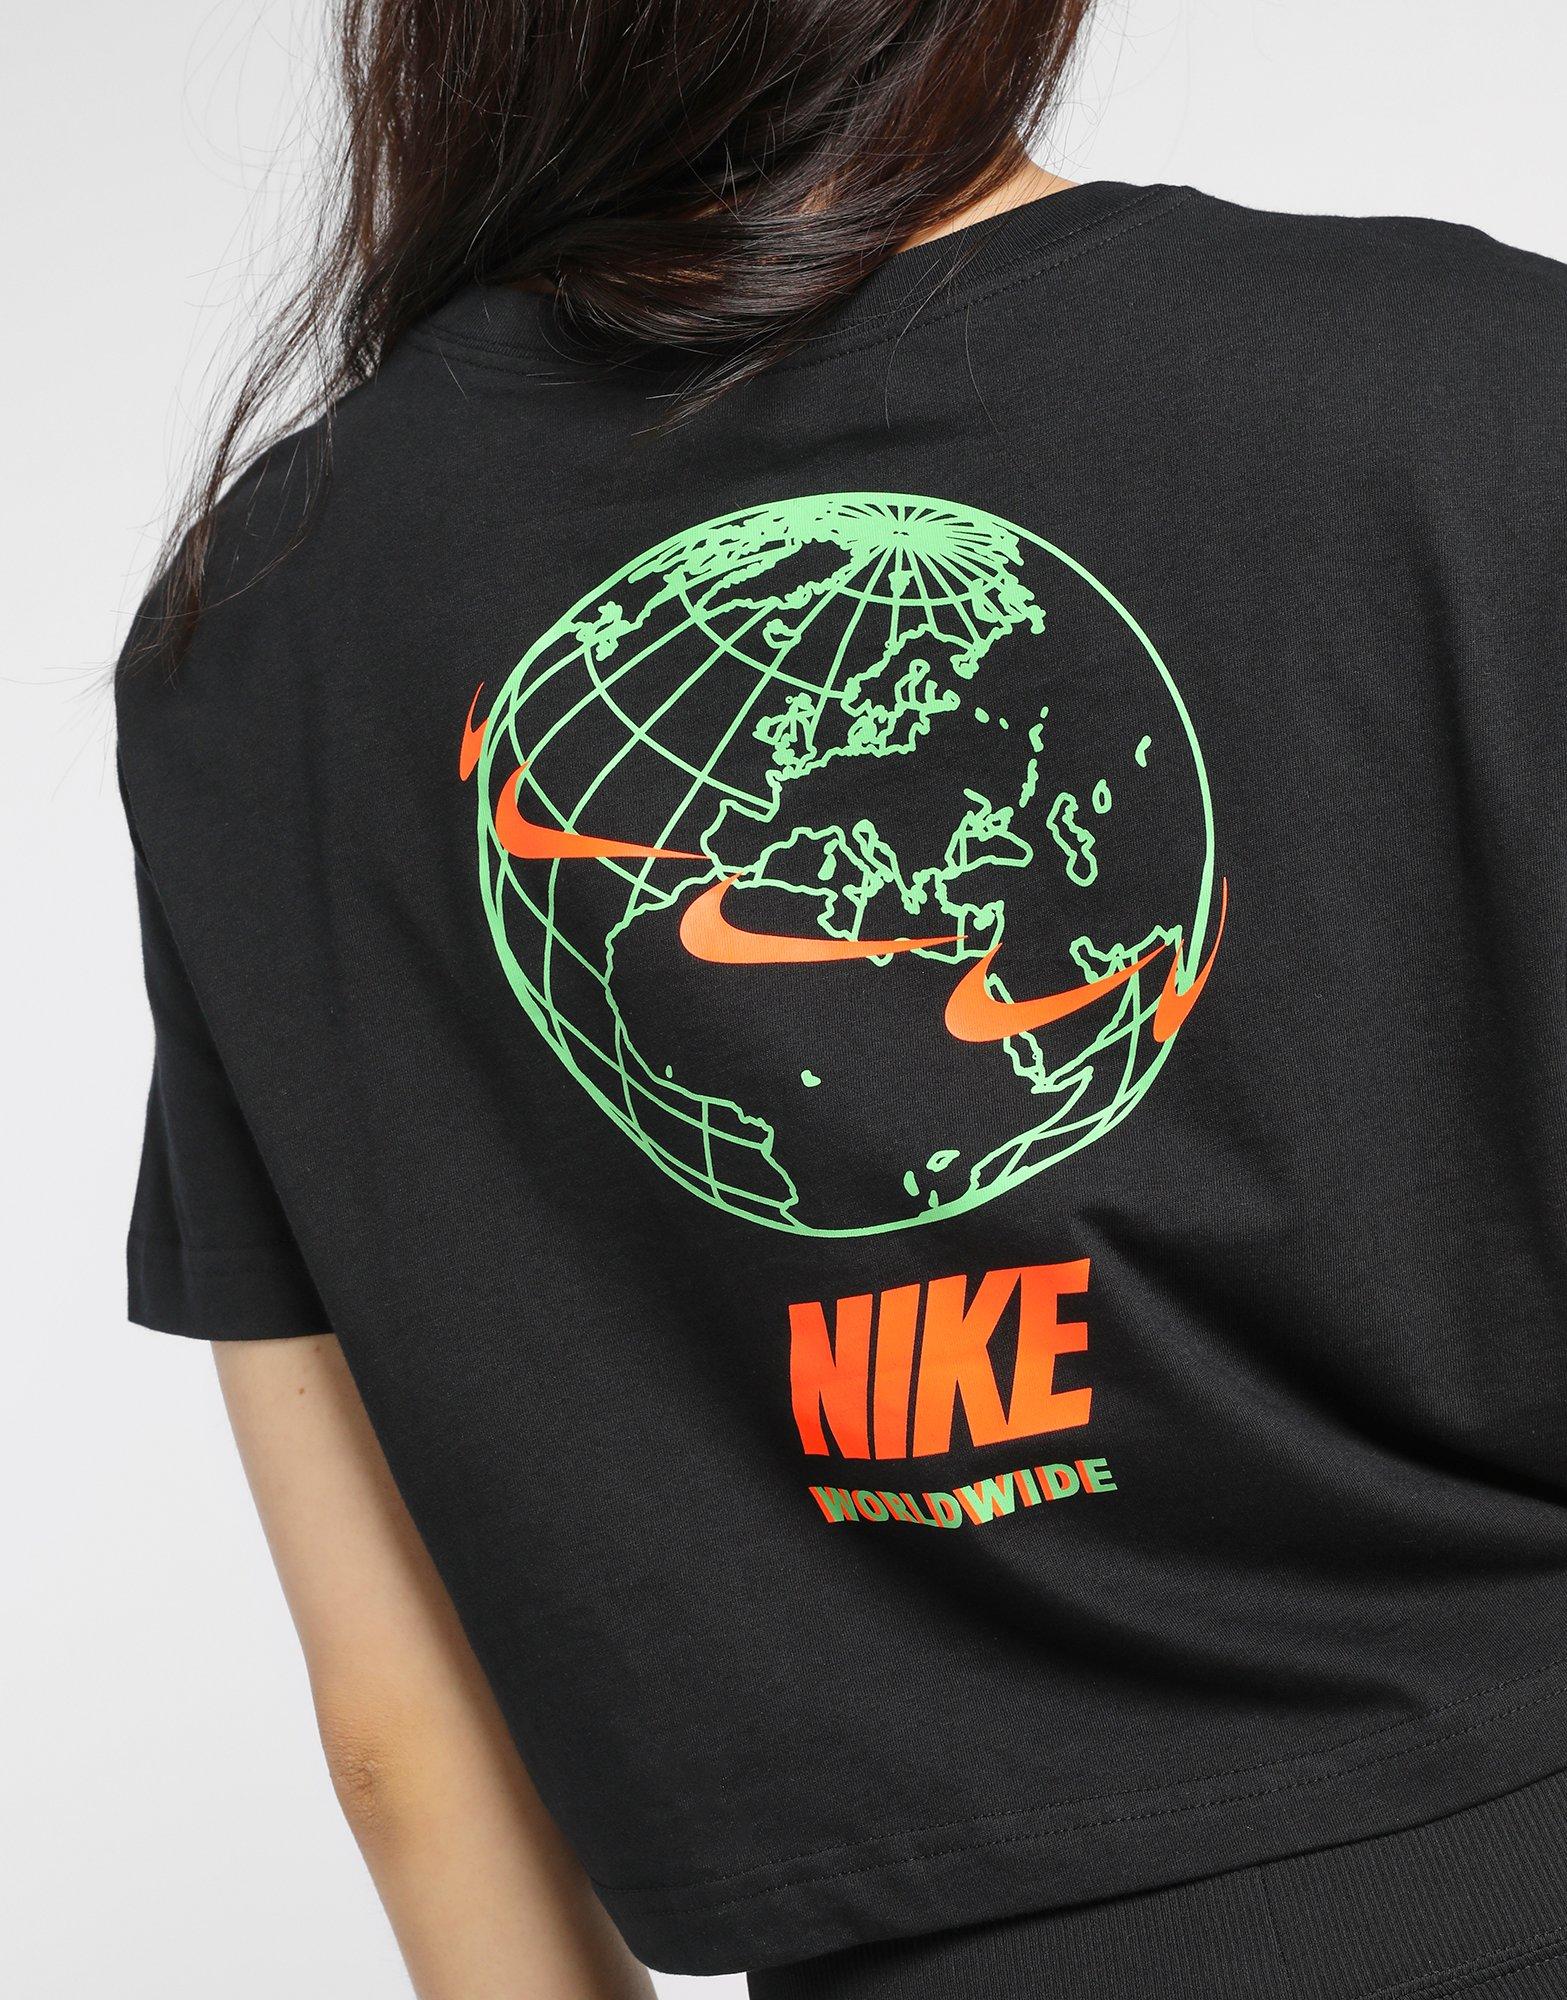 nike worldwide t shirt